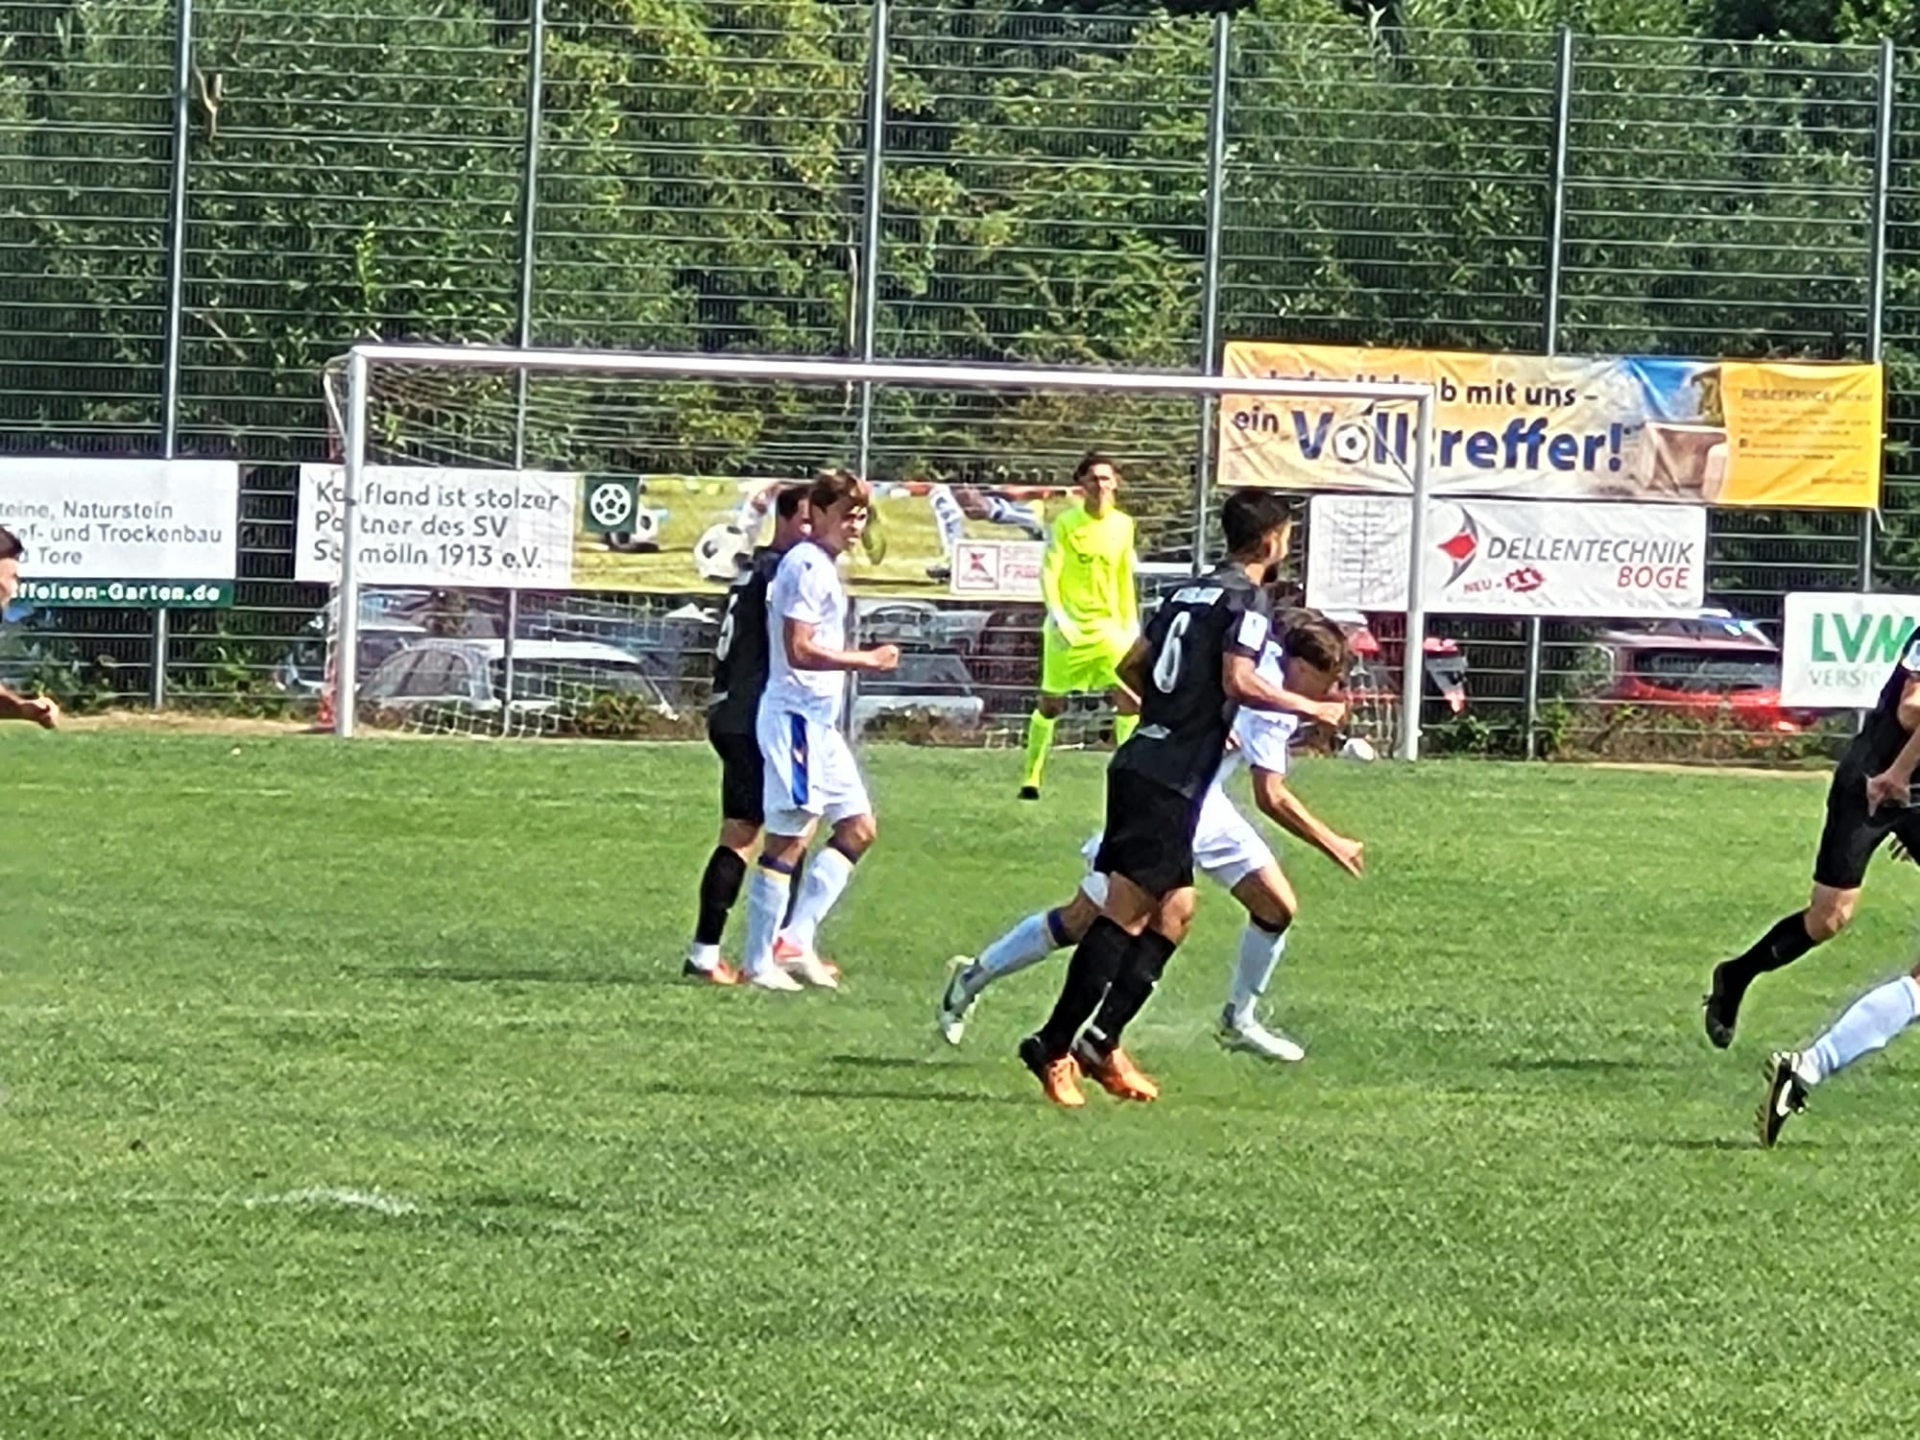 FC Carl Zeiss Jena